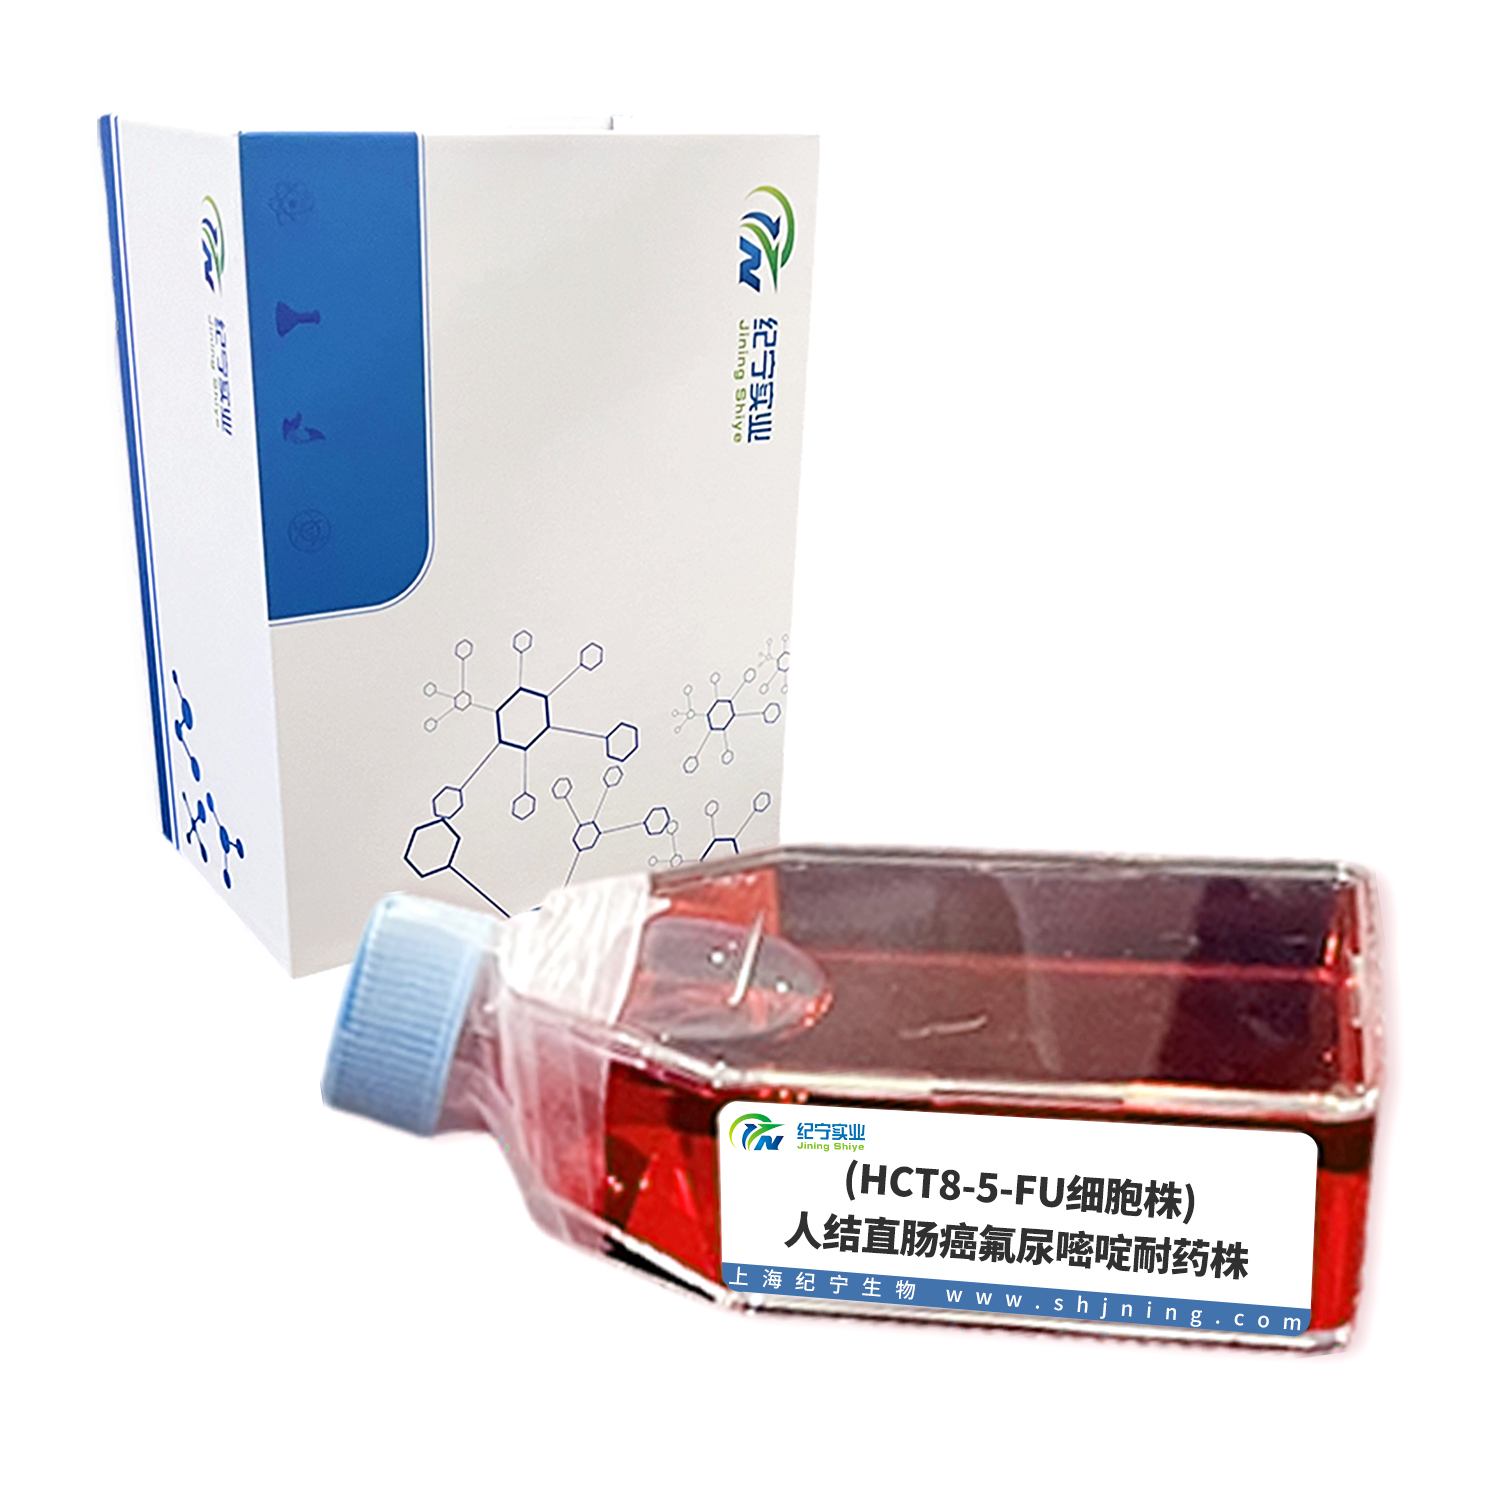 (HCT8-5-FU细胞株)人结直肠癌氟尿嘧啶耐药株